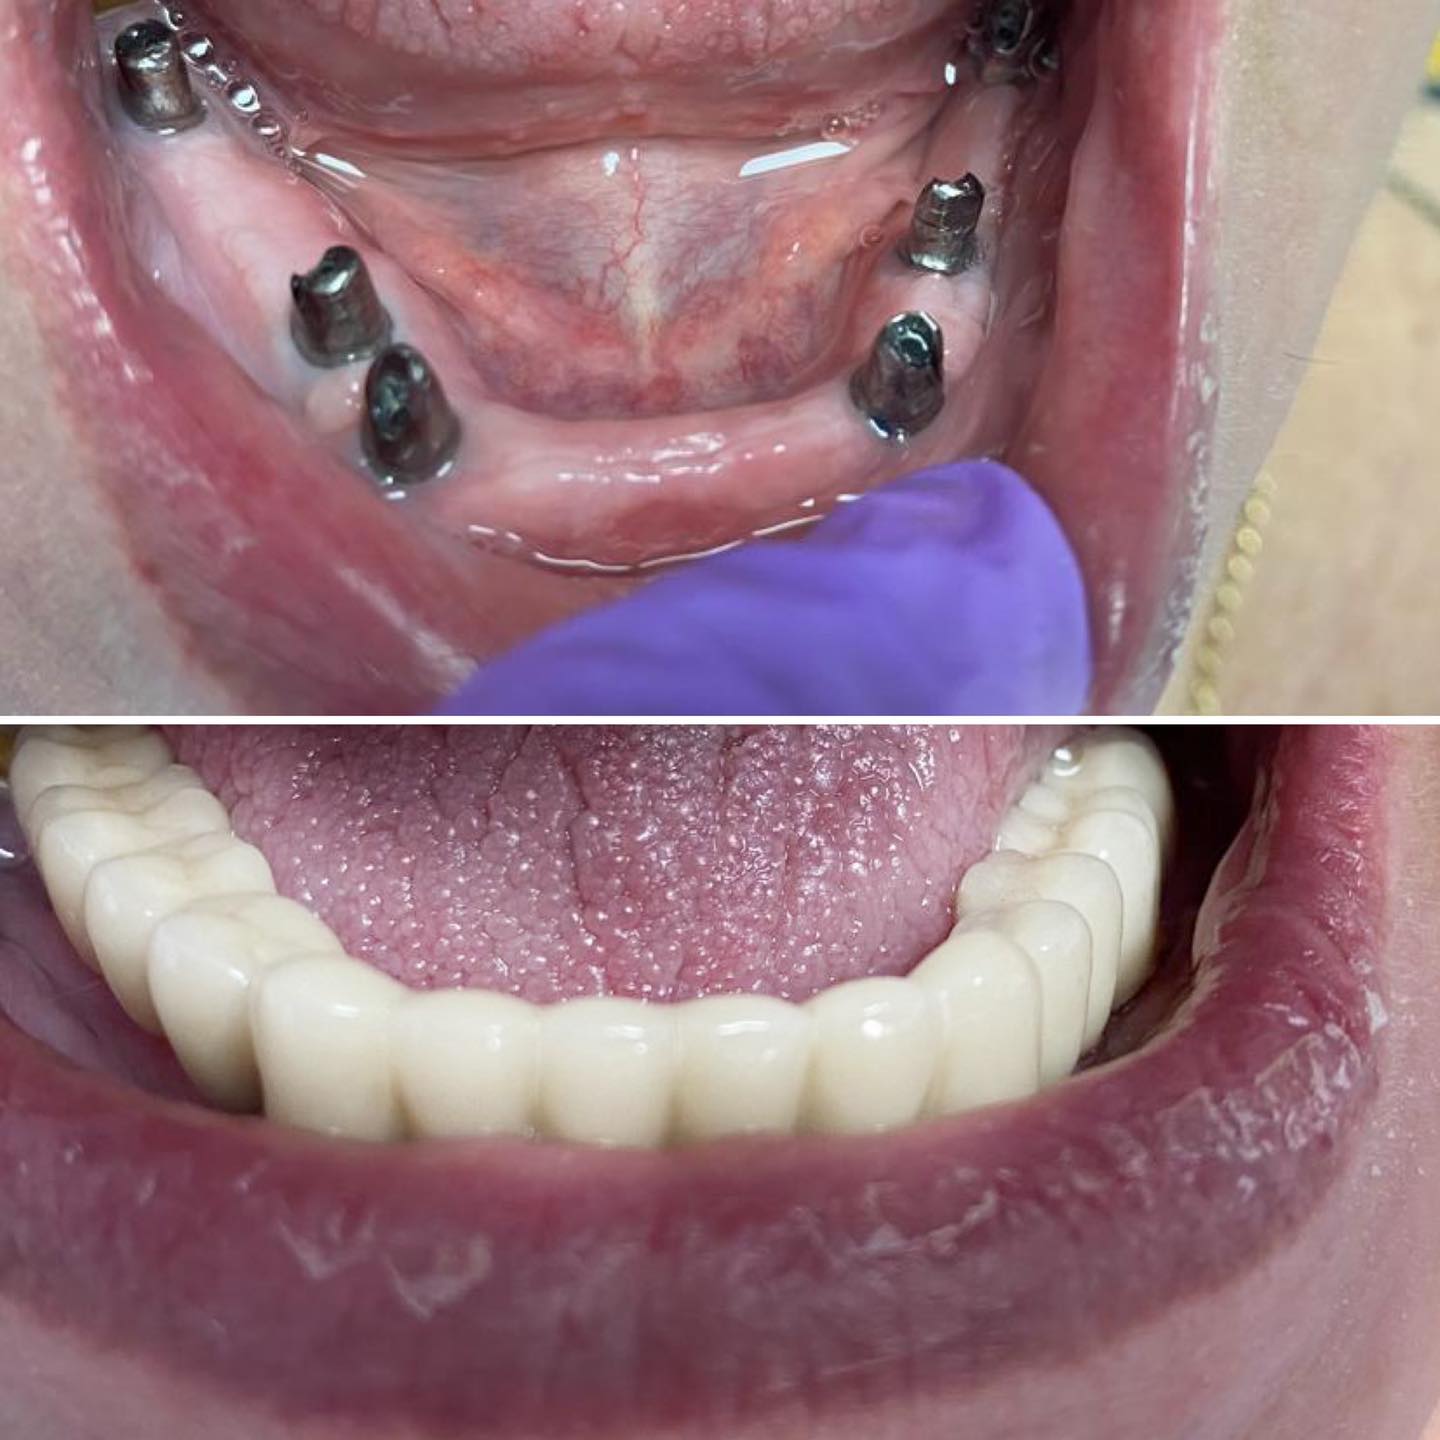 Pret Implant Dentar In Bucuresti Recomandarile Medicilor In